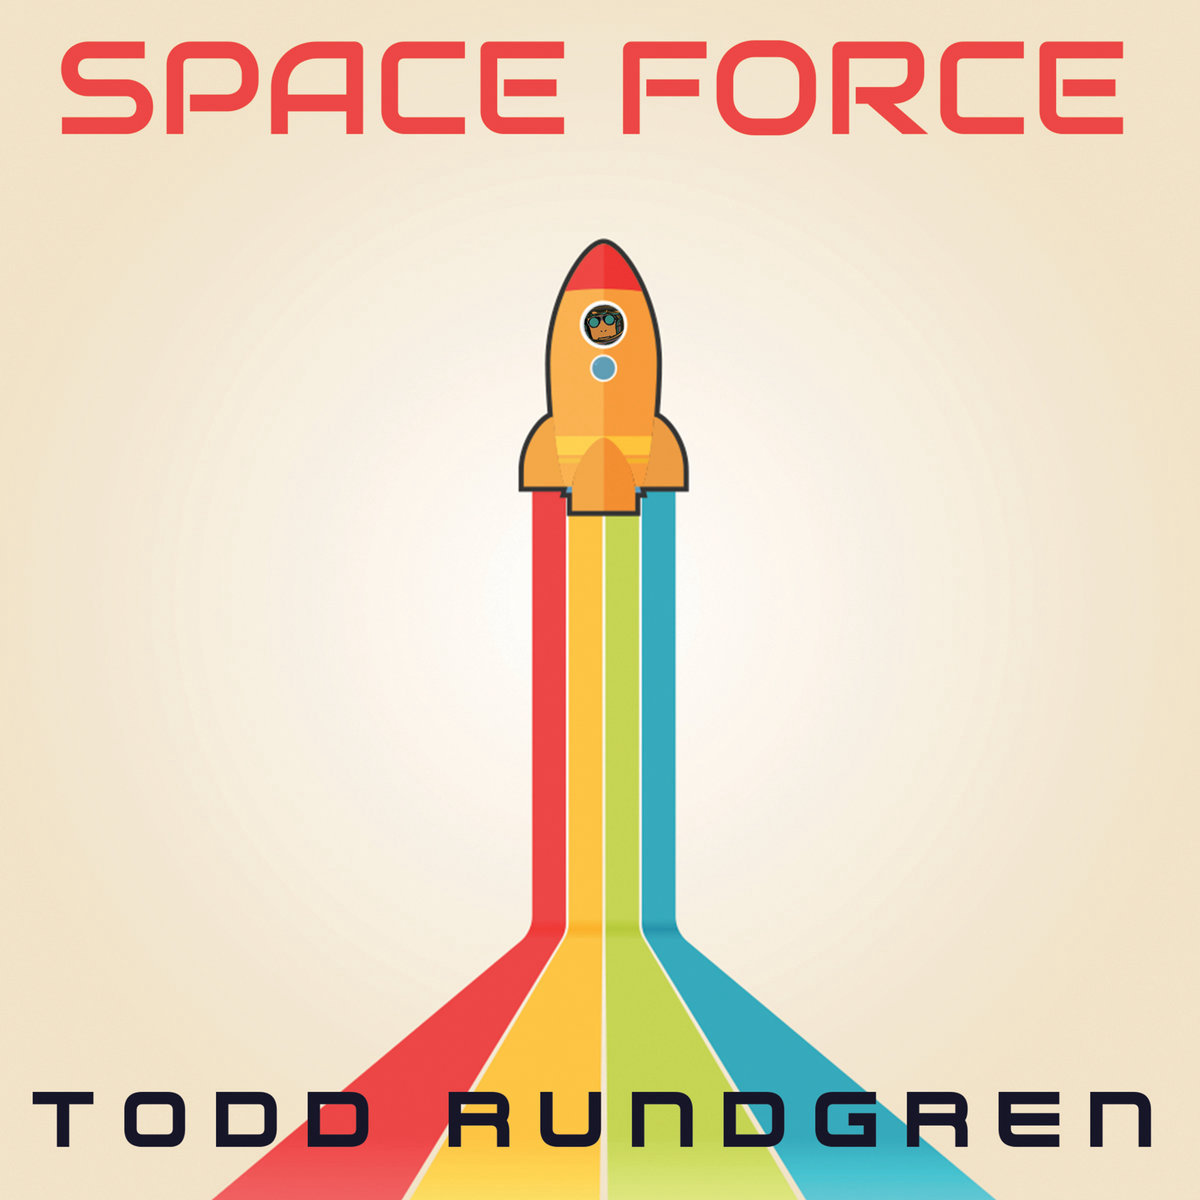 Todd Rundgren featuring The Lemon Twigs — I’m Leaving cover artwork